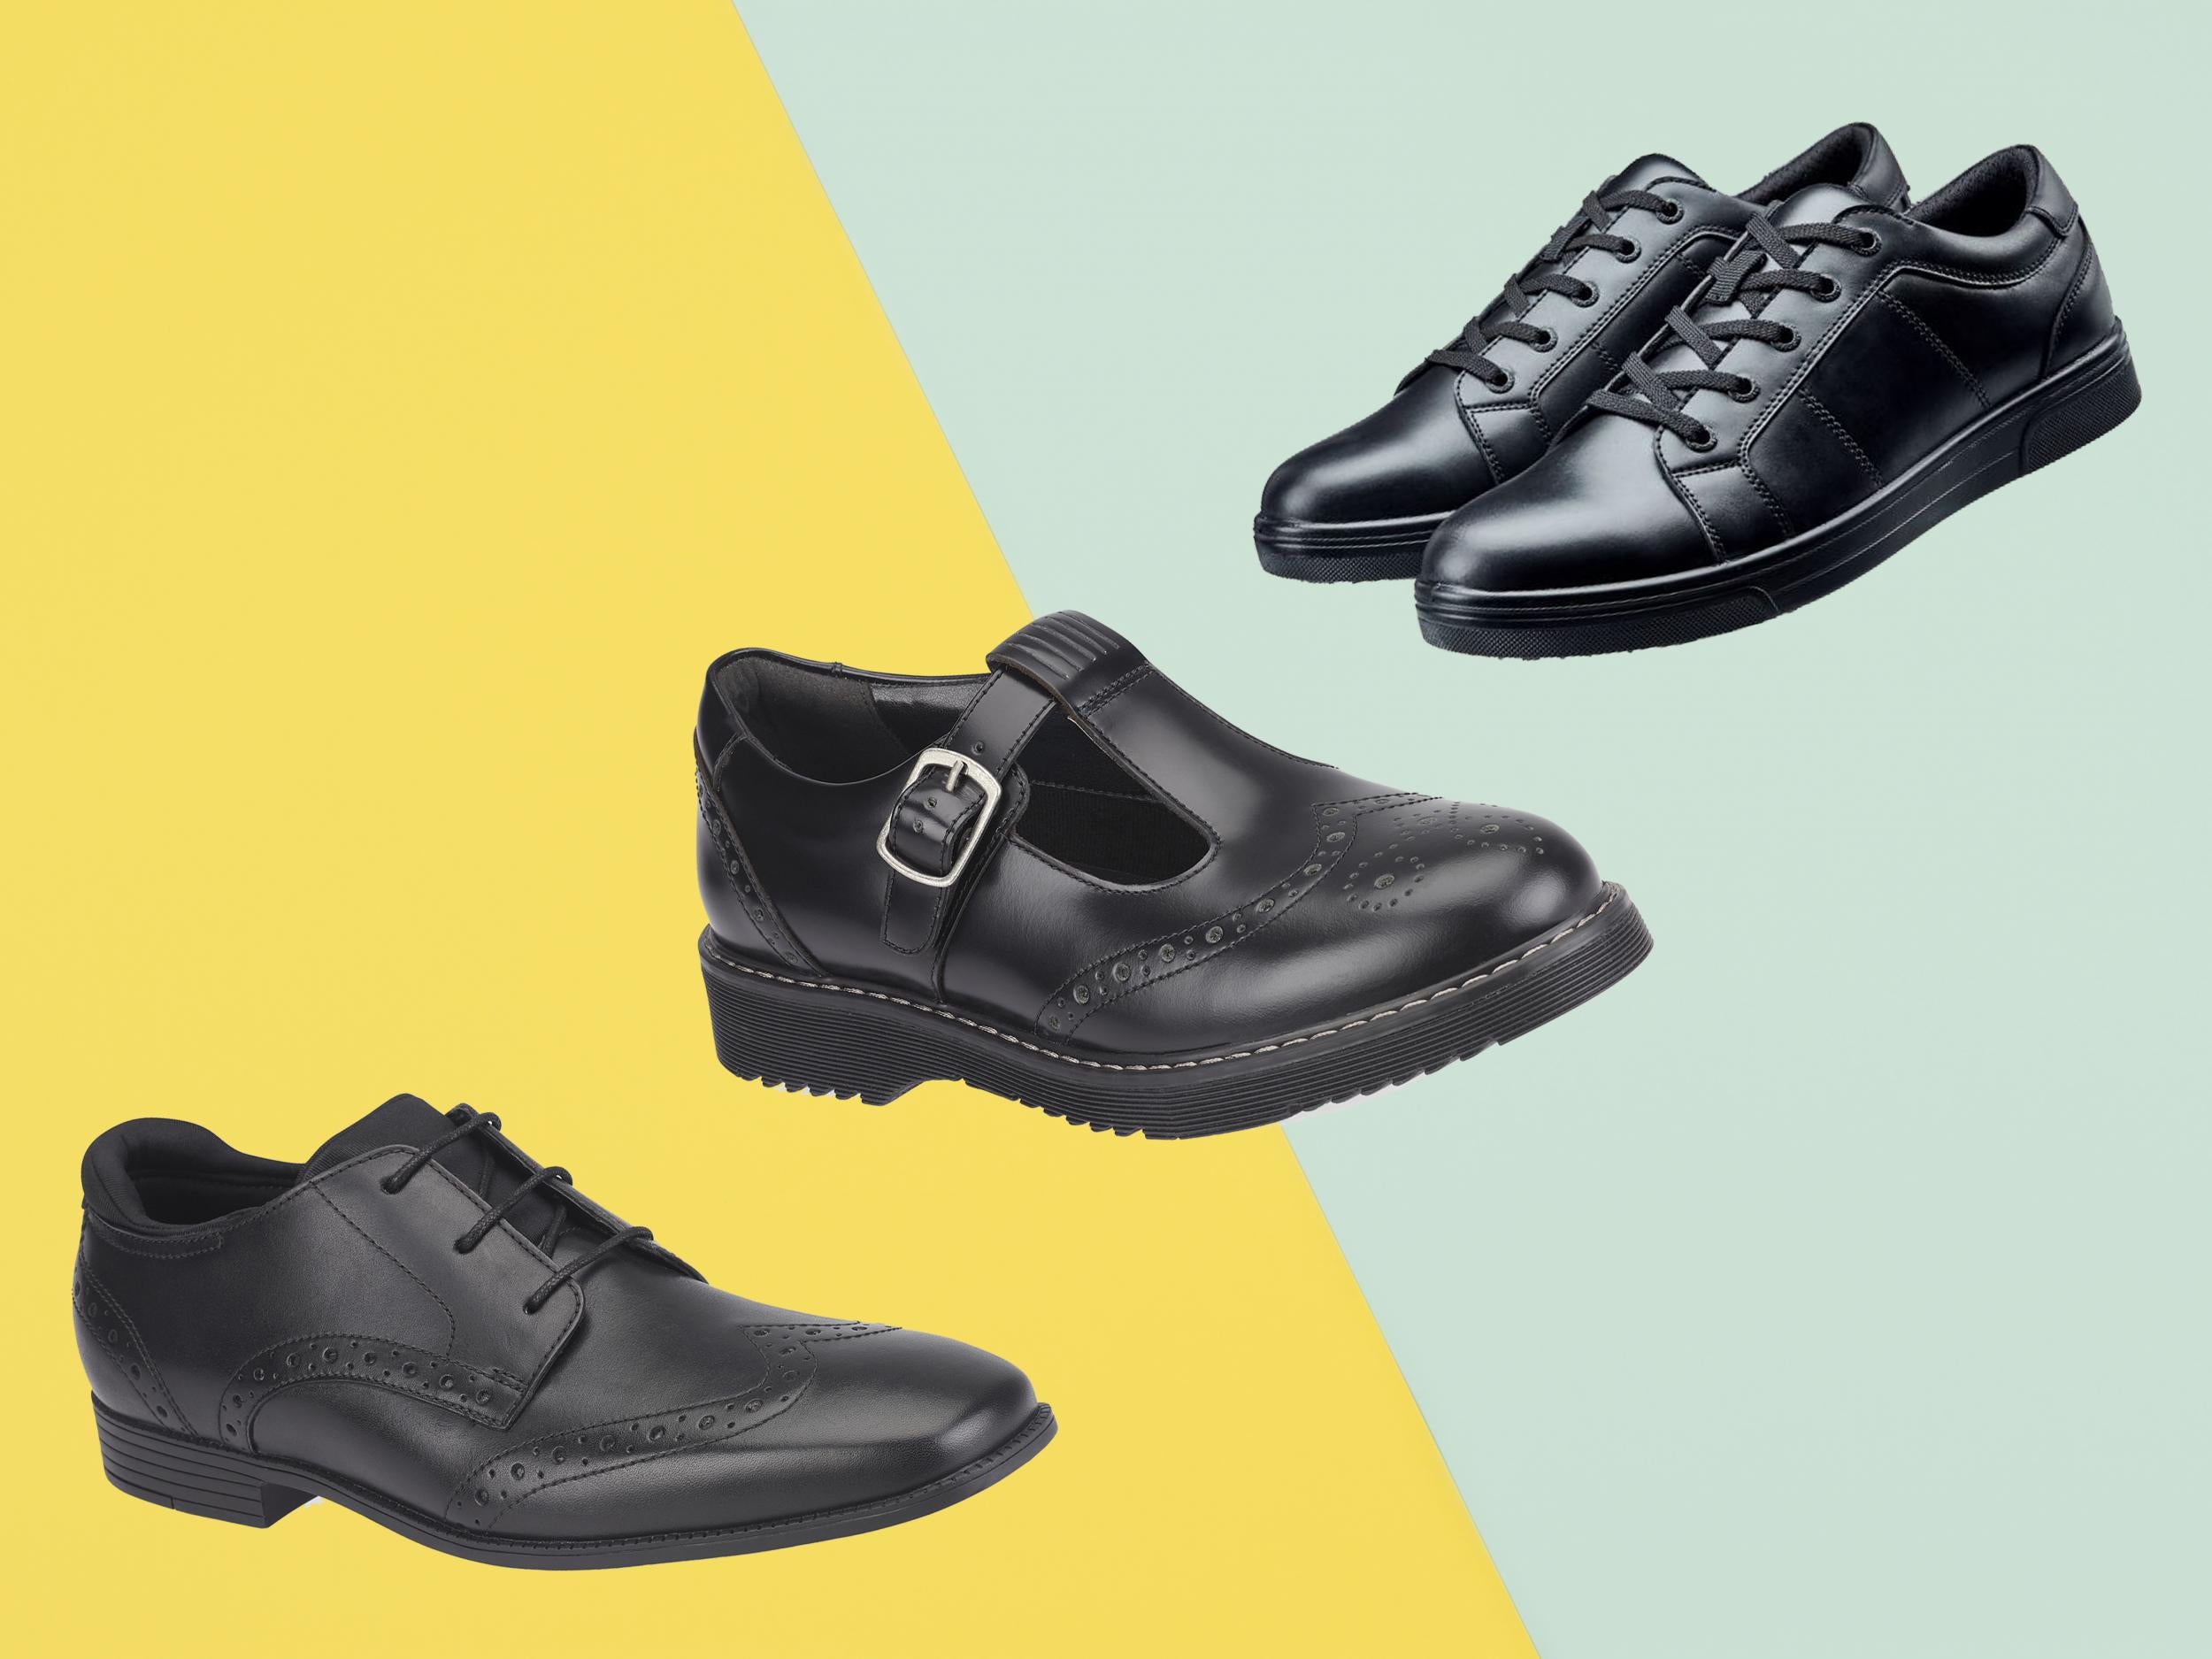 Boys Black School Shoes PU Leather Smart Dress Formal Easy On UK Sizes 10-5